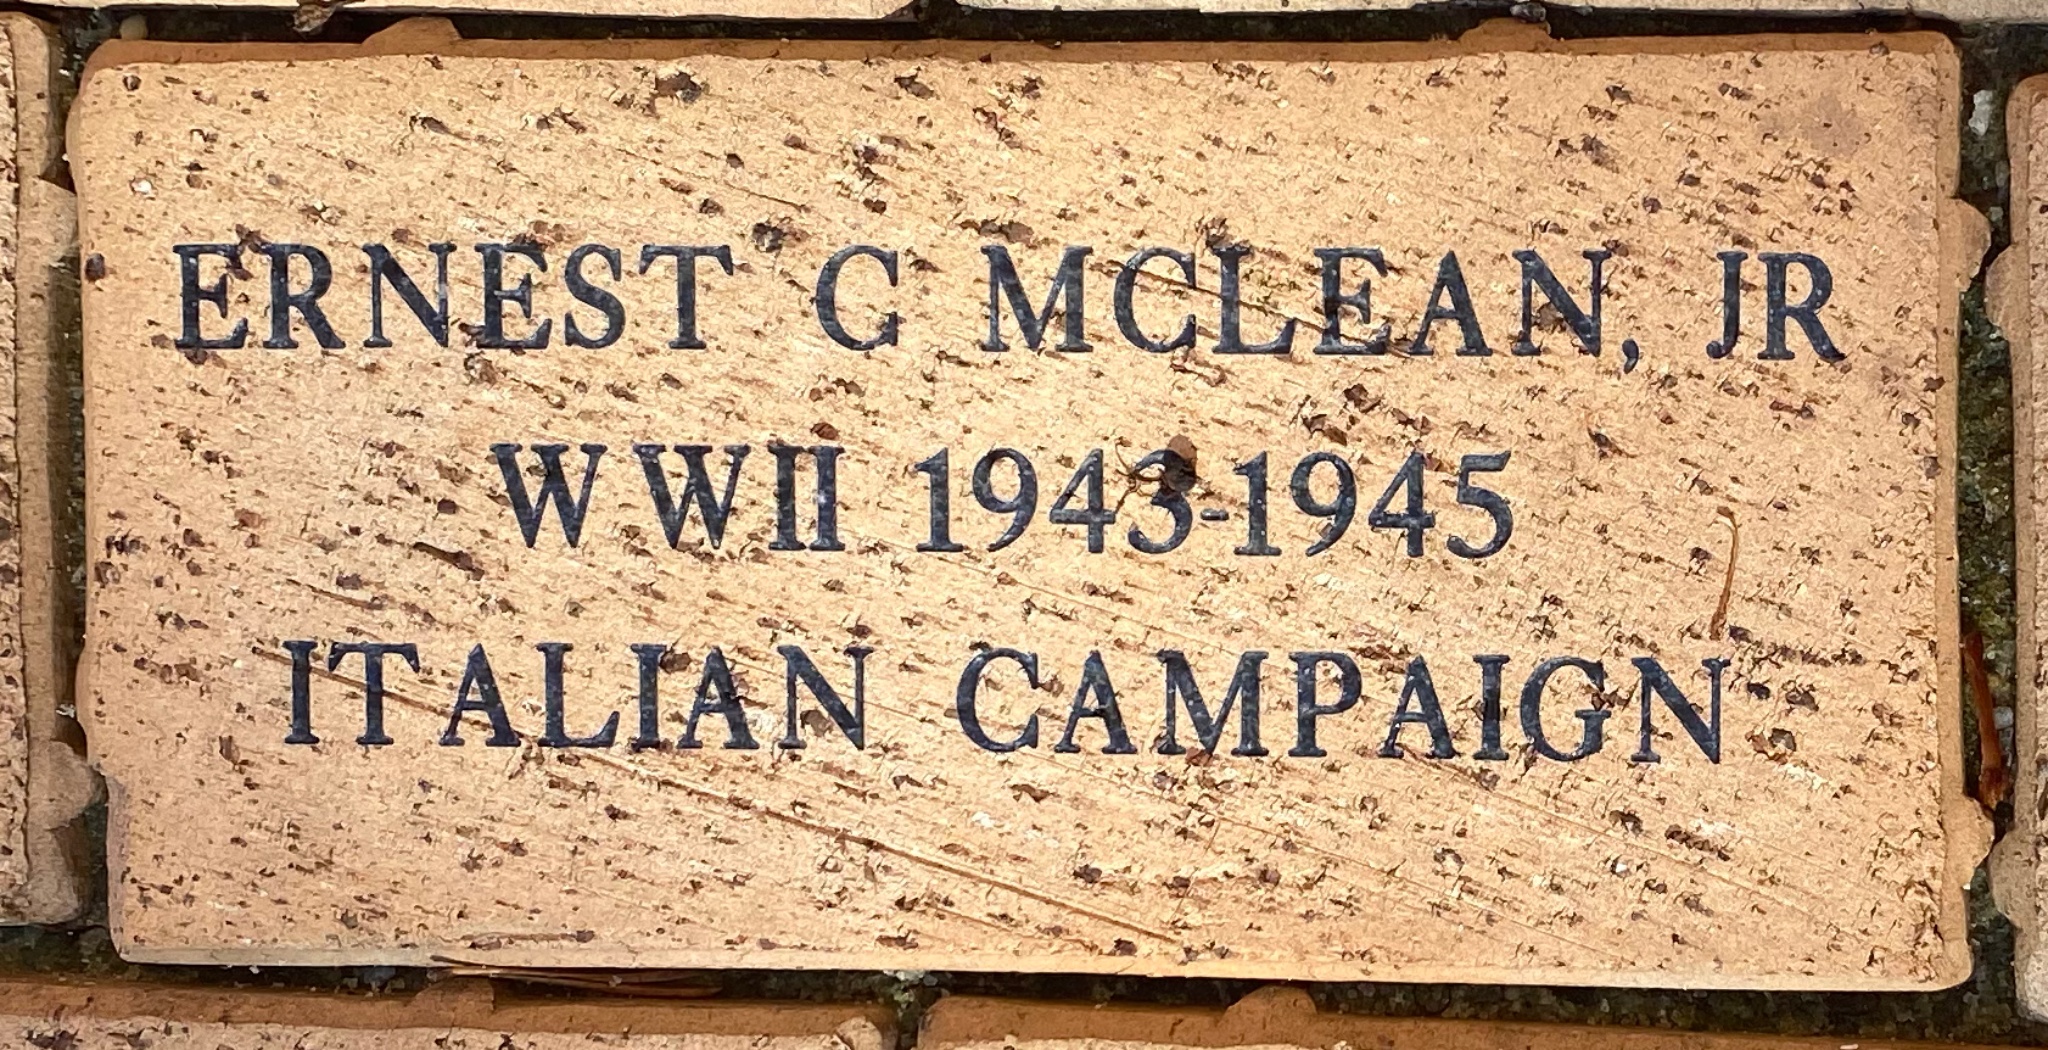 ERNEST C MCLEAN, JR WWII 1943-1945 ITALIAN CAMPAIGN